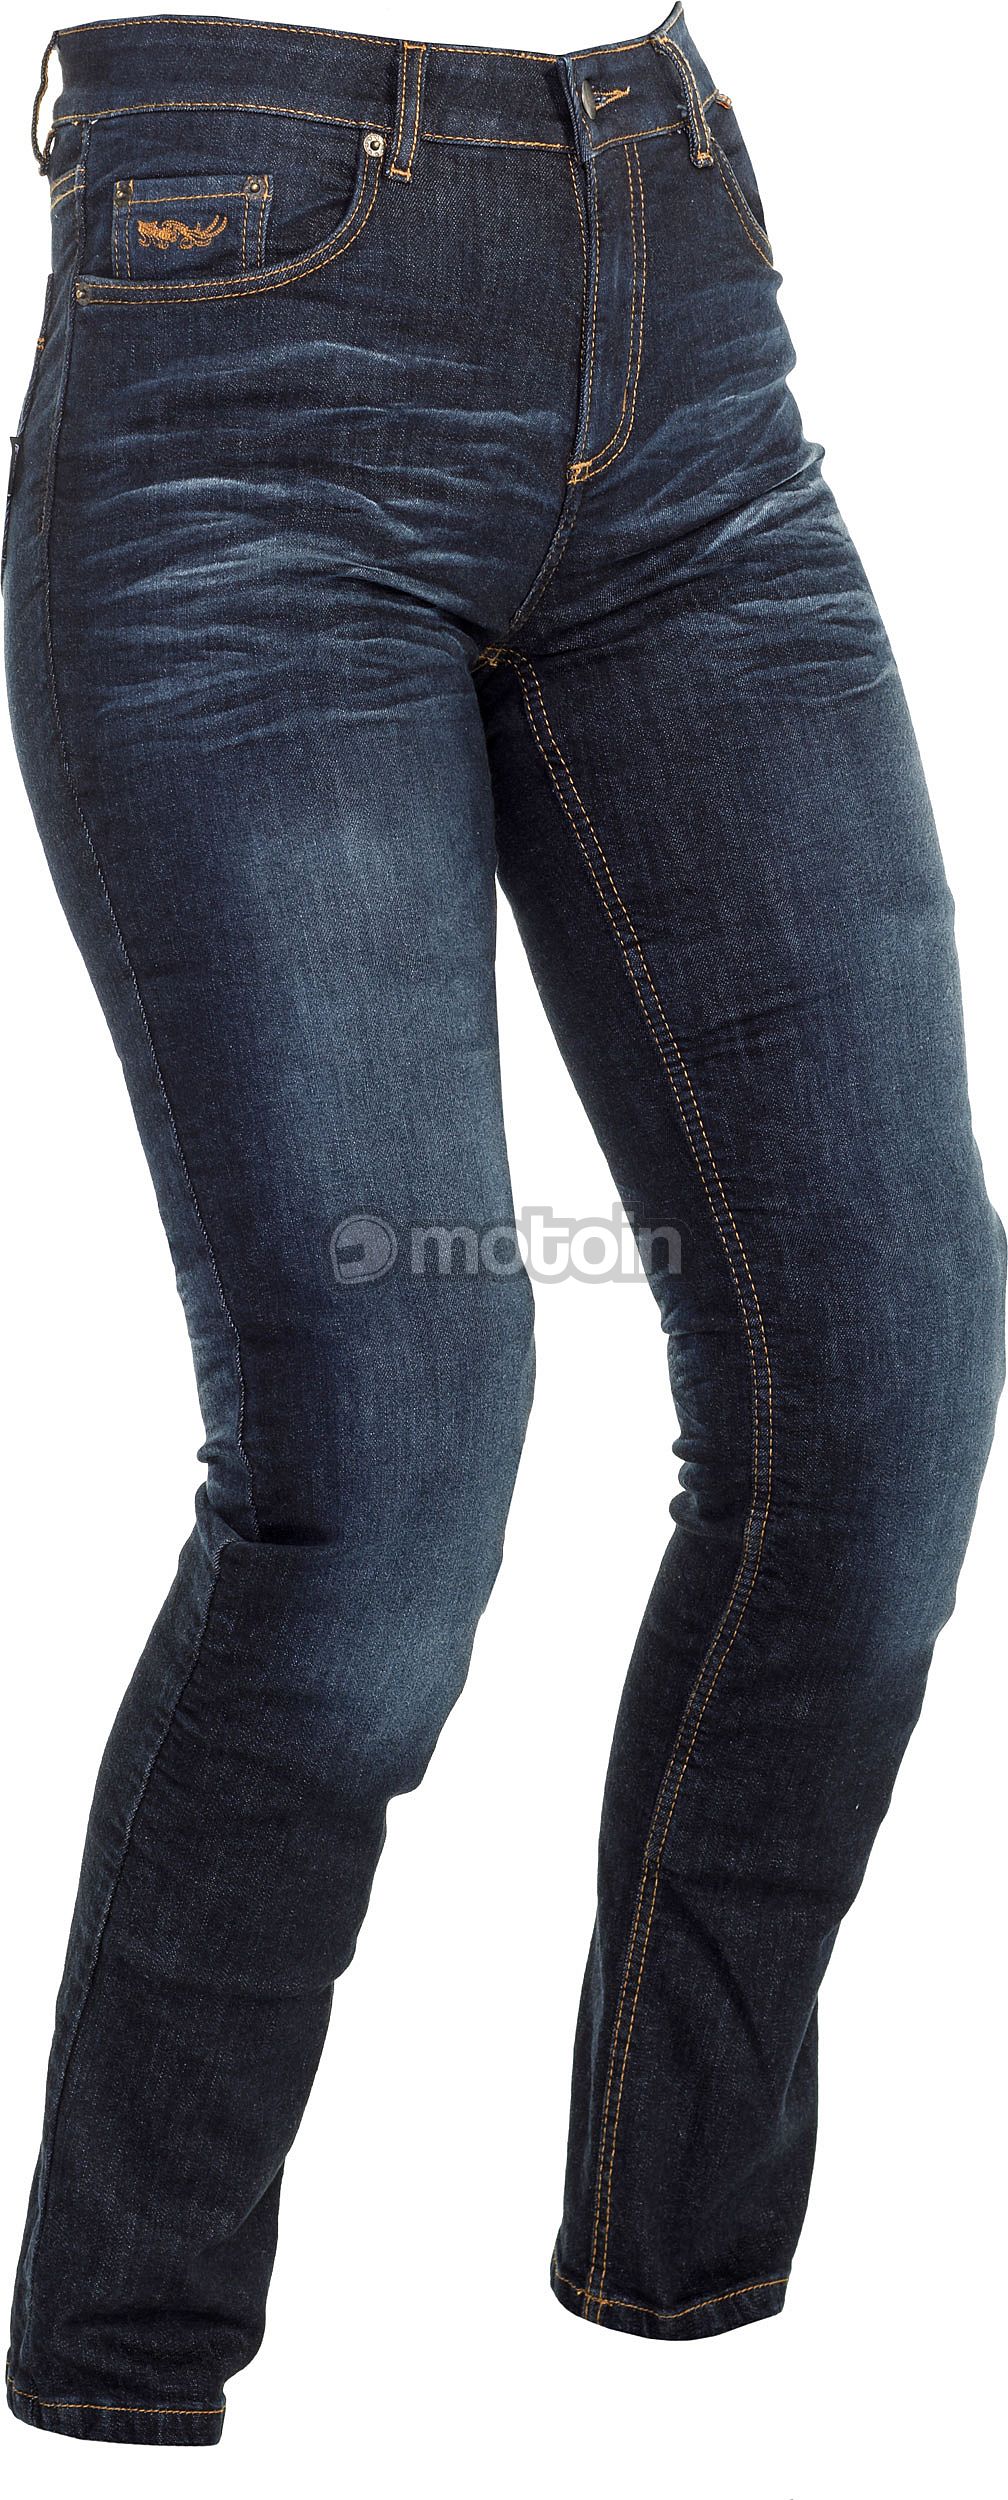 Richa Nora Ladies Jeans Regular - Dark Blue